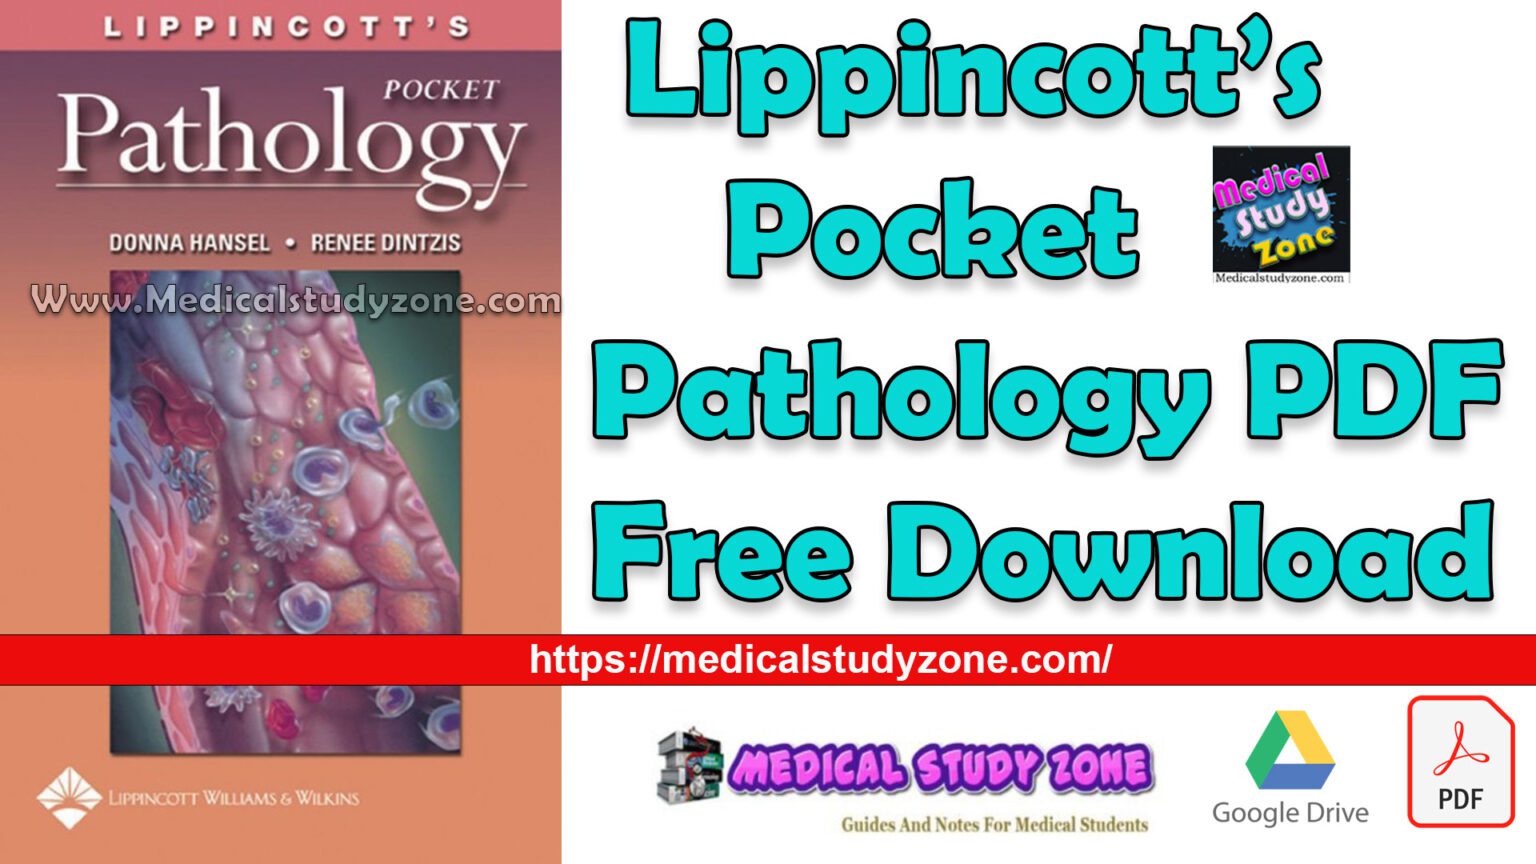 lippincott-s-pocket-pathology-pdf-free-download-direct-link-medical